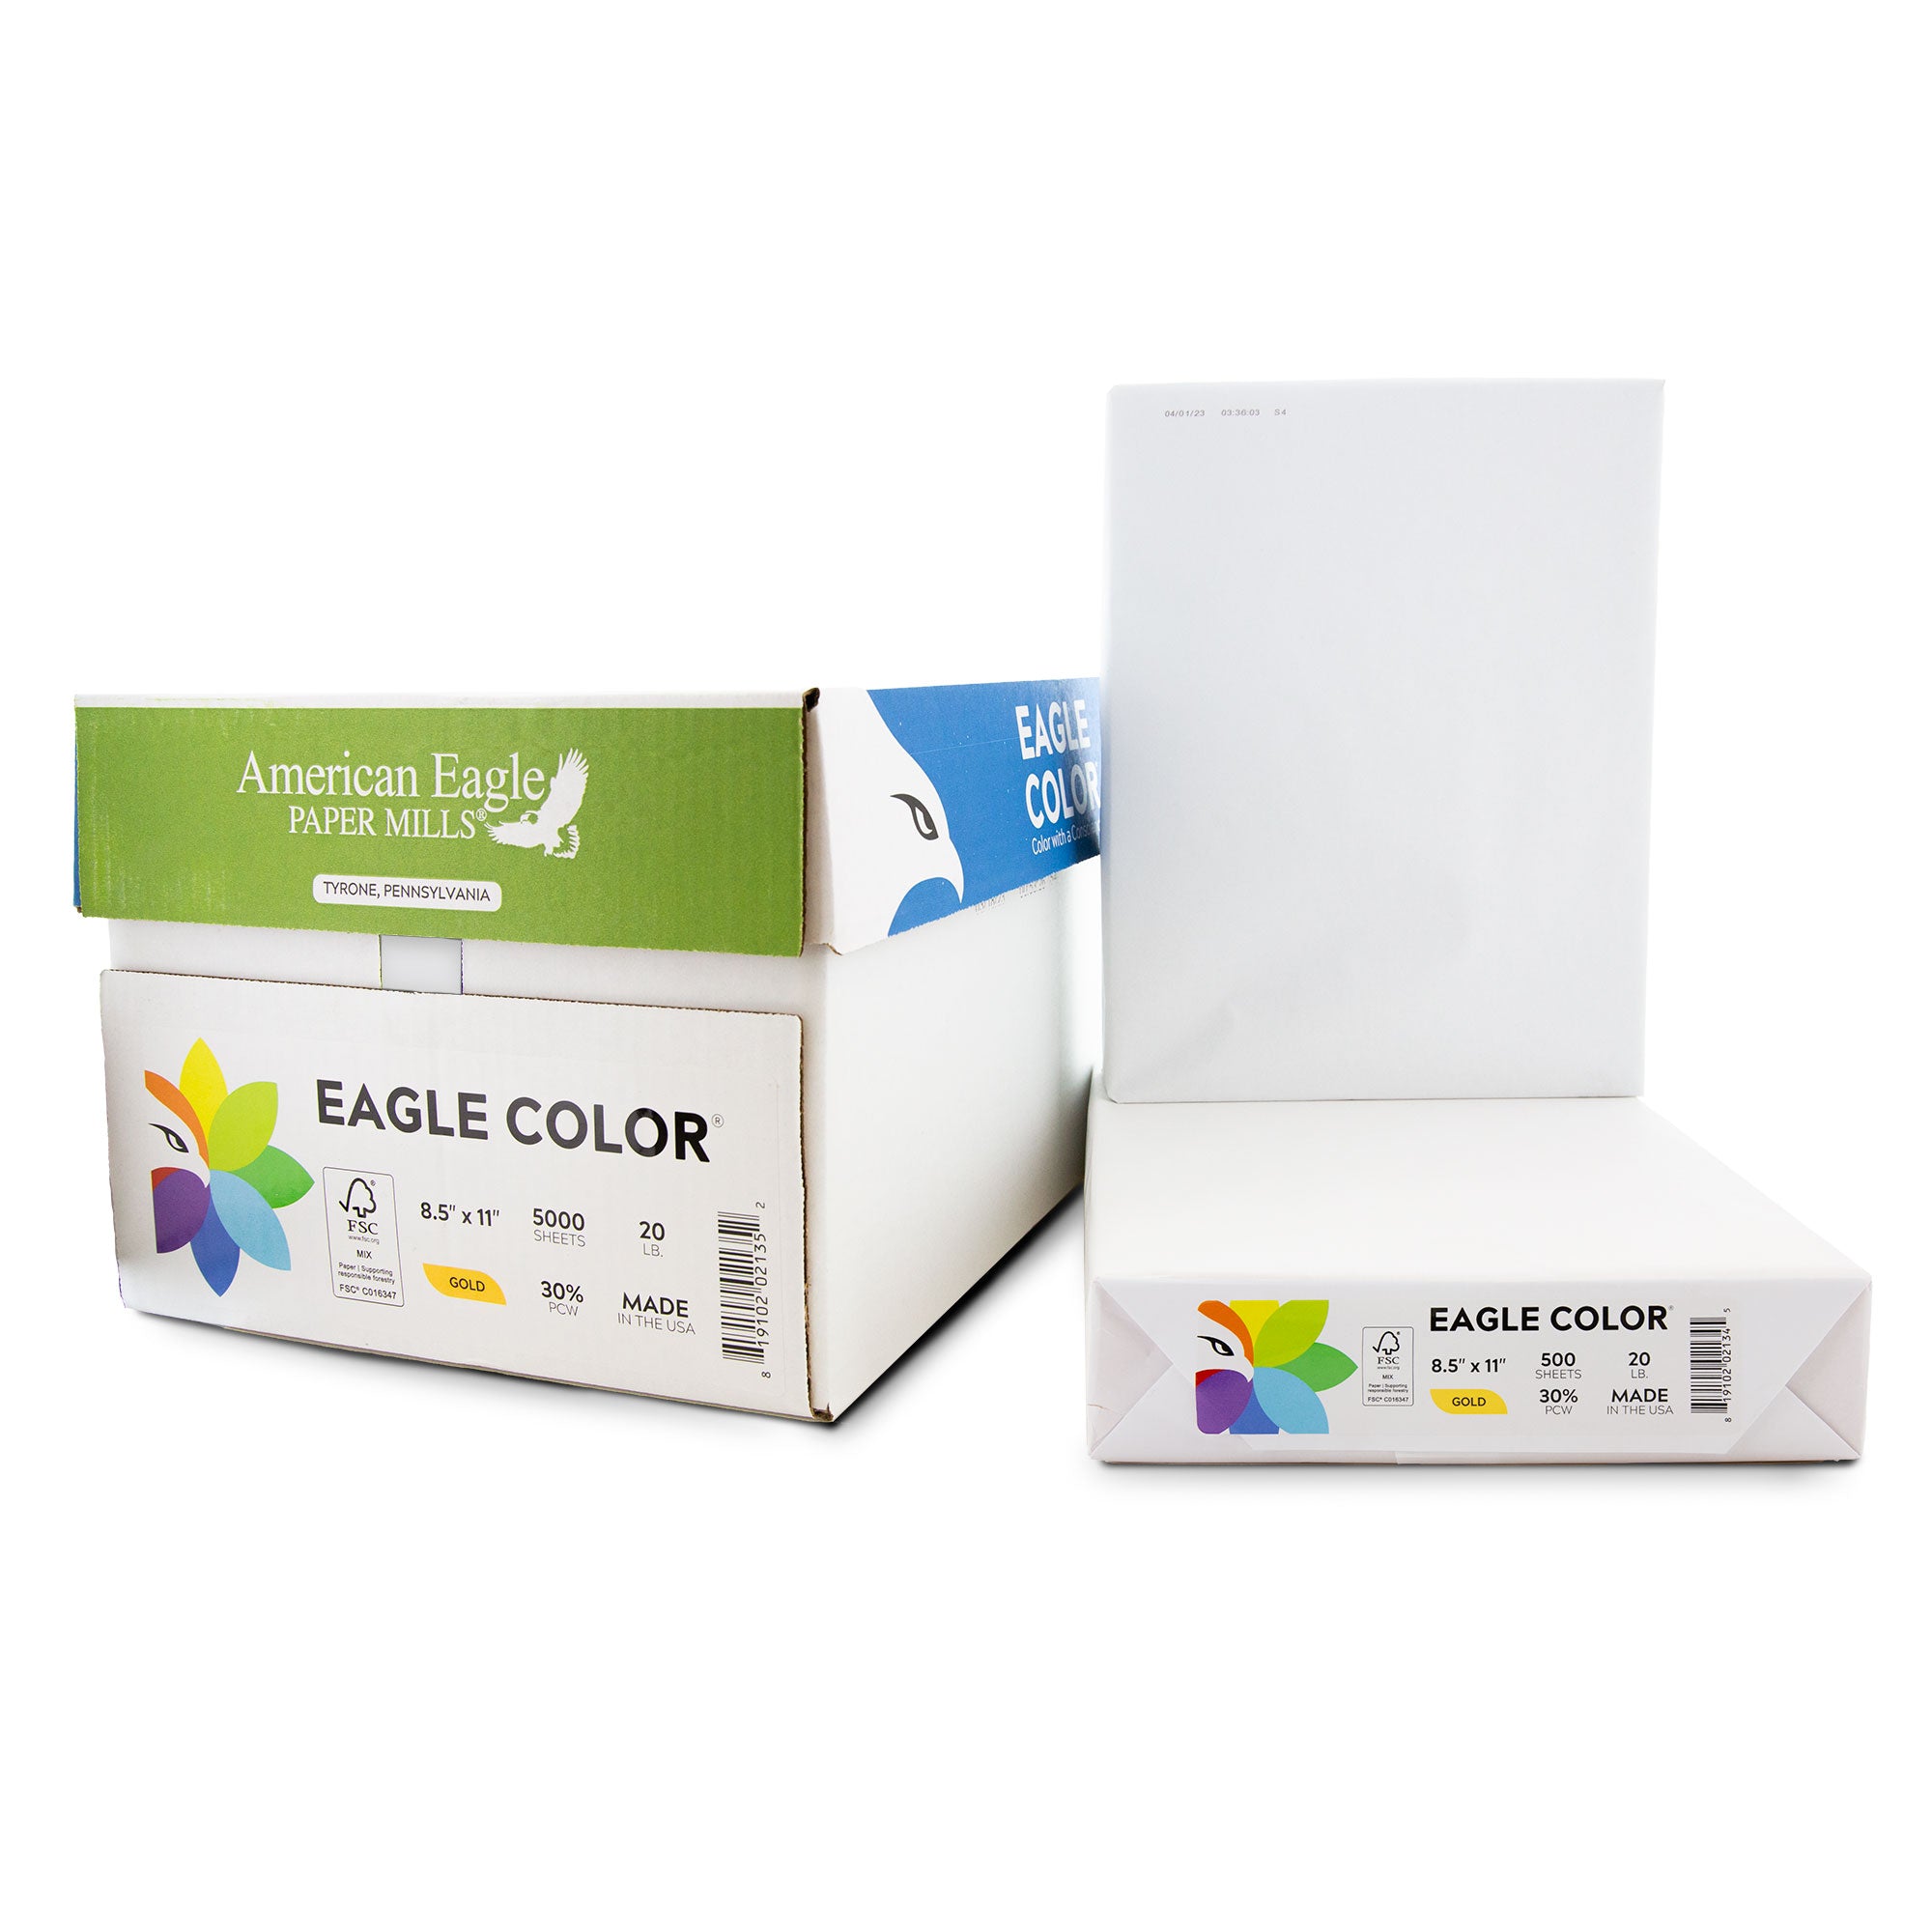 Eagle Color (30% PCW) 8.5 x 11 Gold Colored Copy Paper (500 Sheets/Ream) 1 Ream